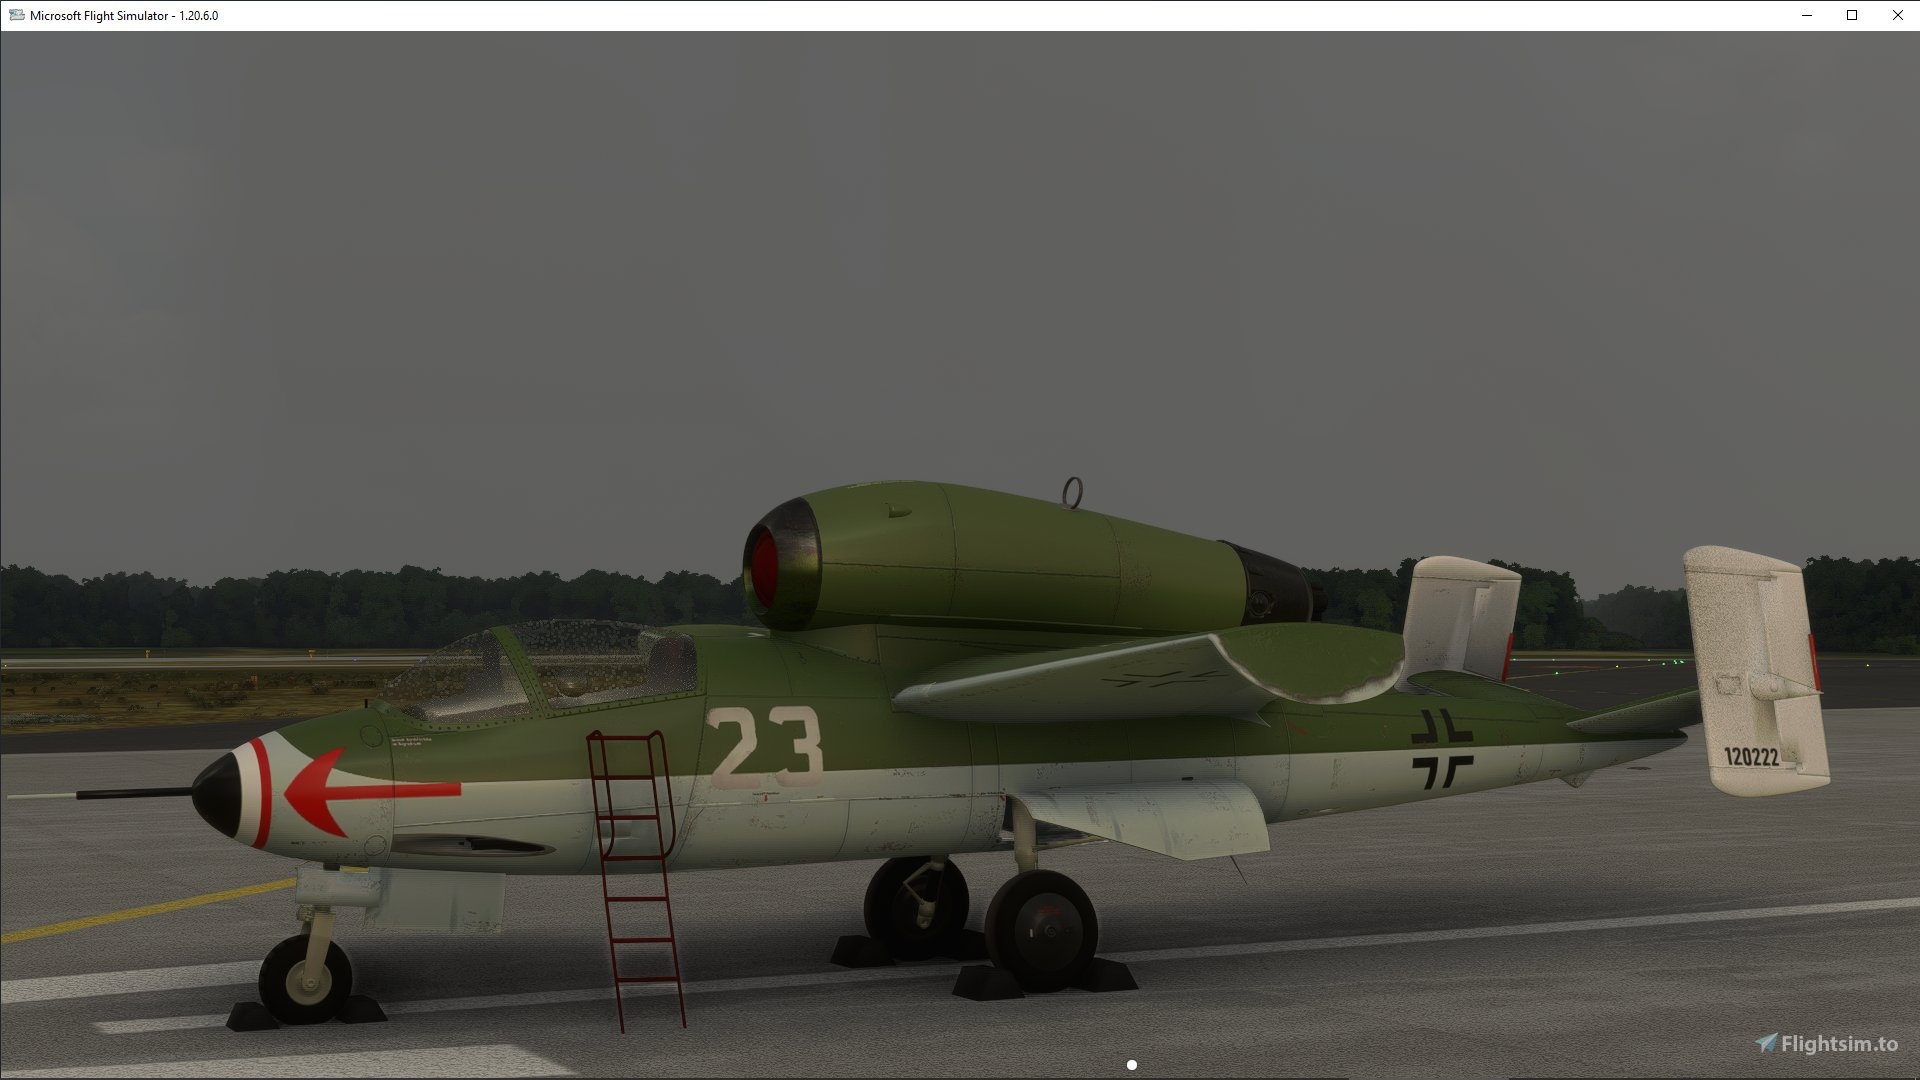 Heinkel He 162 “Salamander”